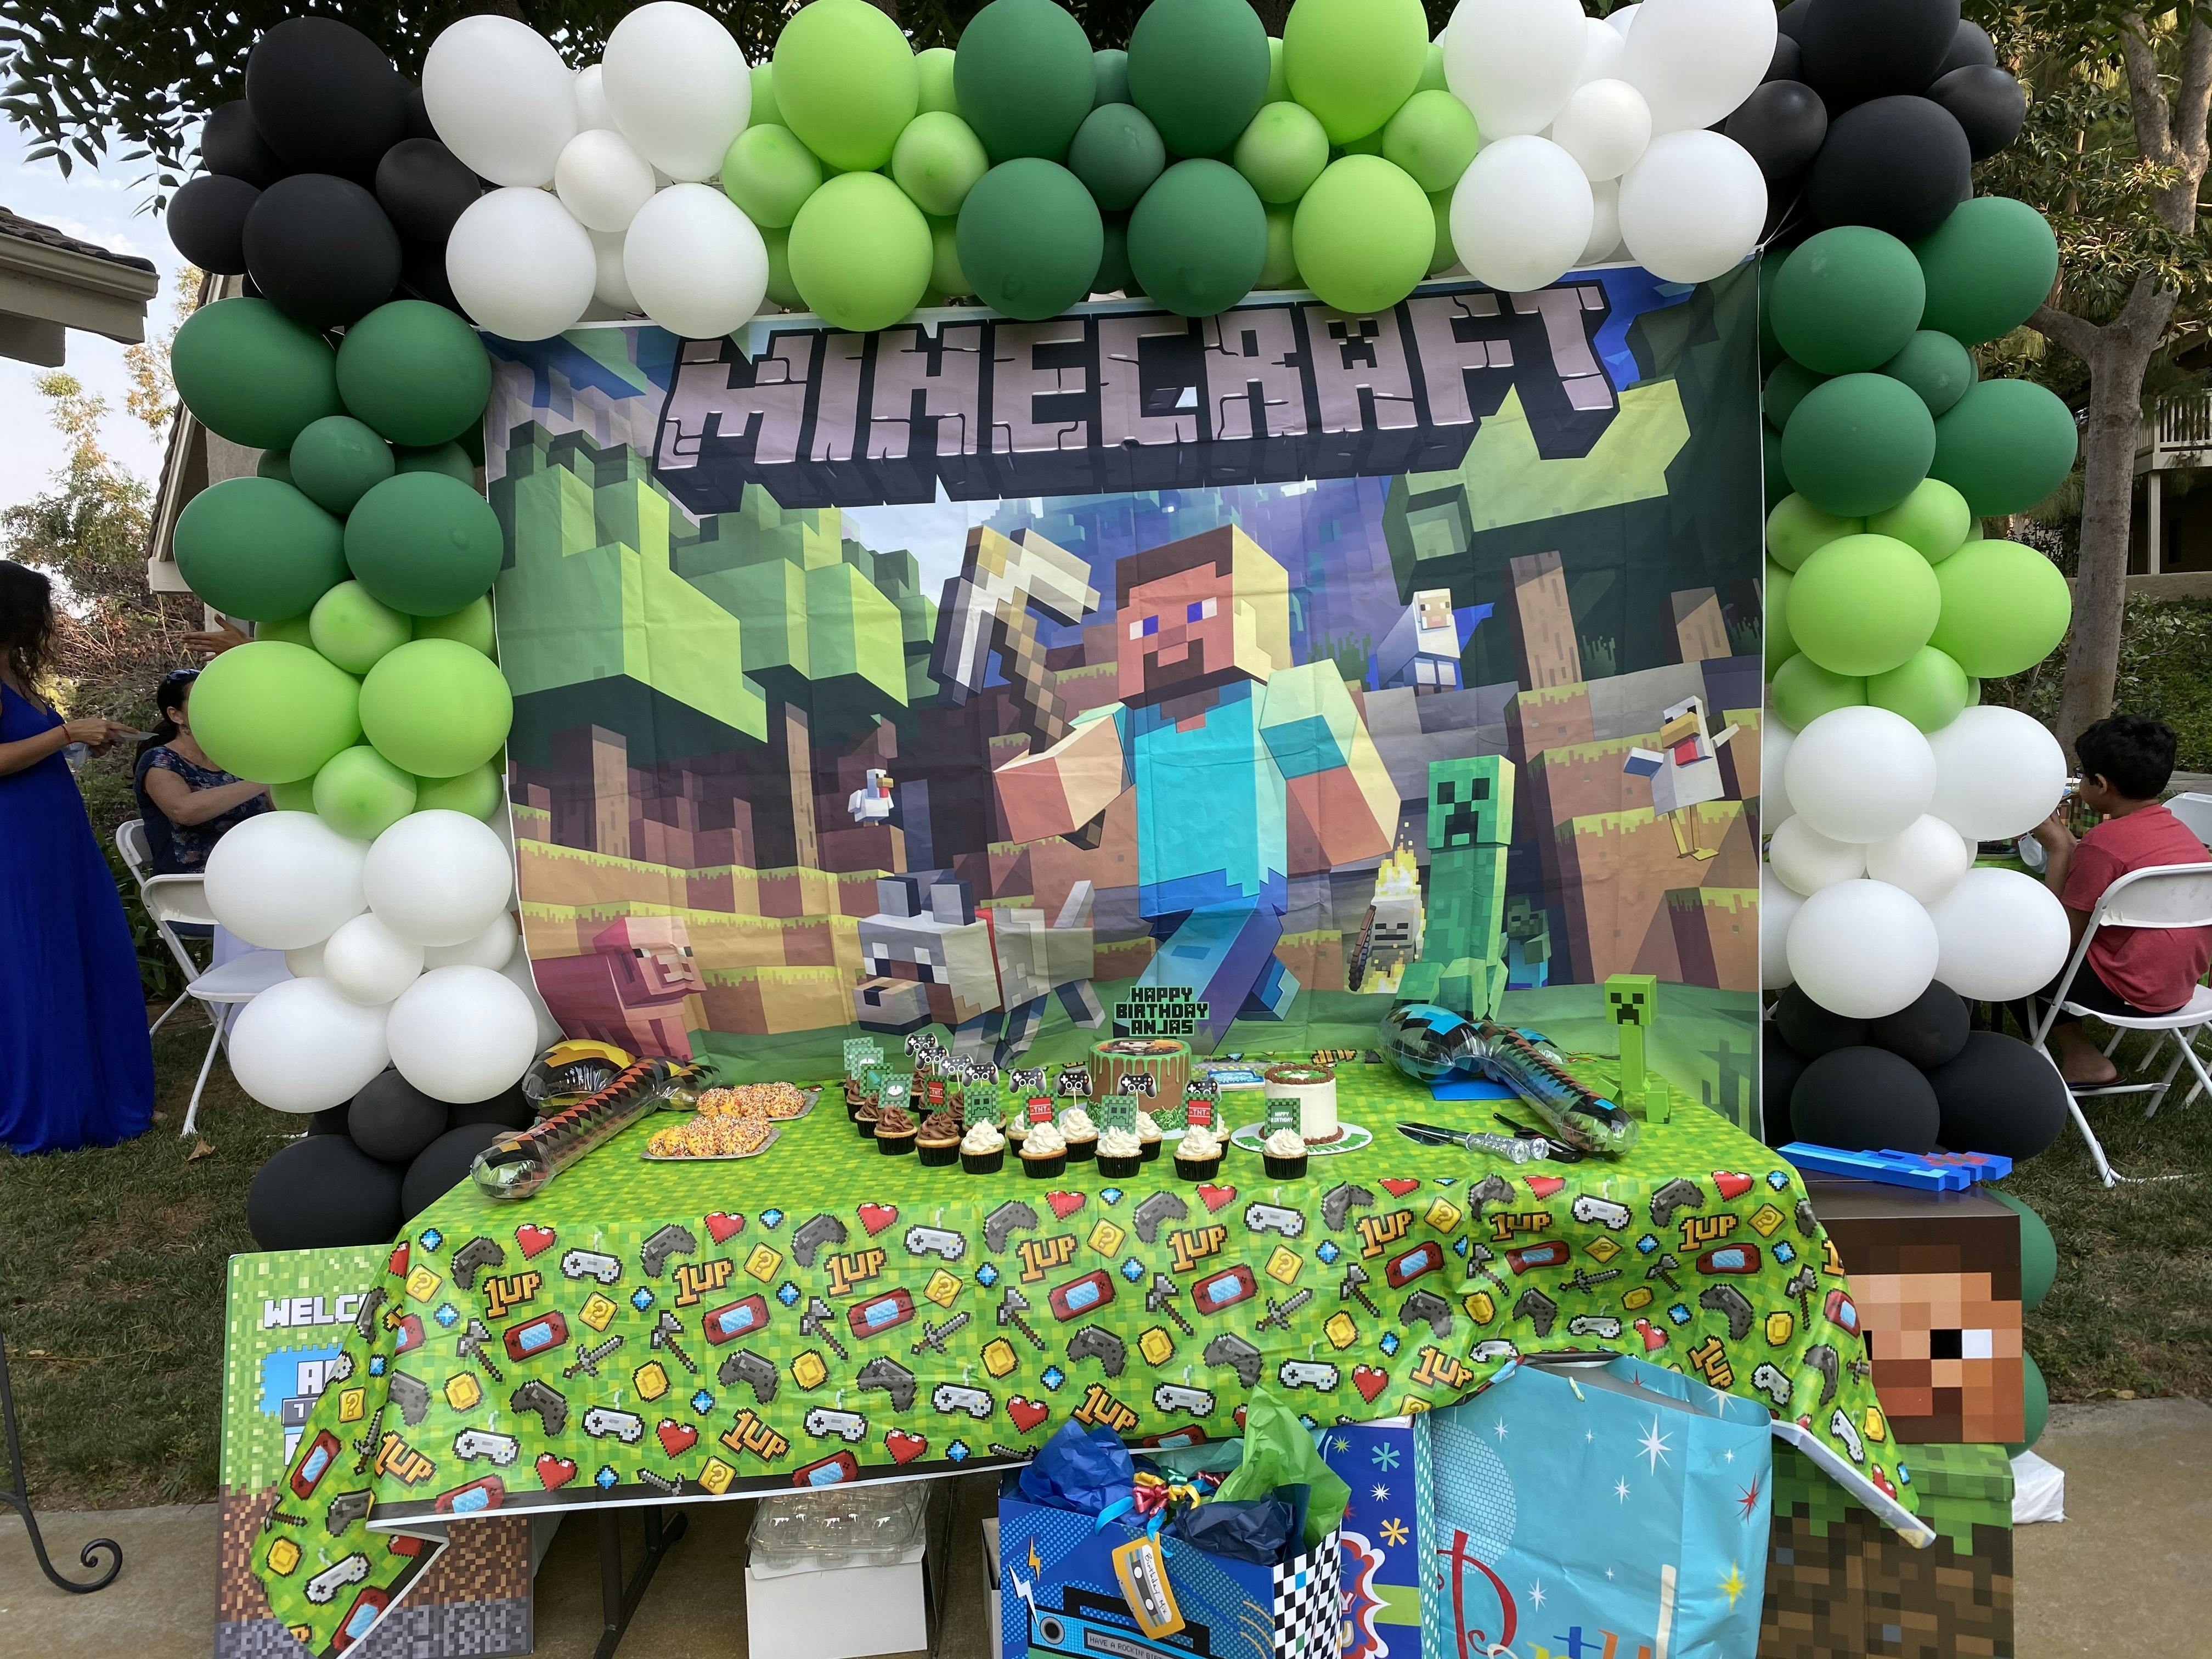 Minecraft Birthday Party (with Free Printables) - Elva M Design Studio